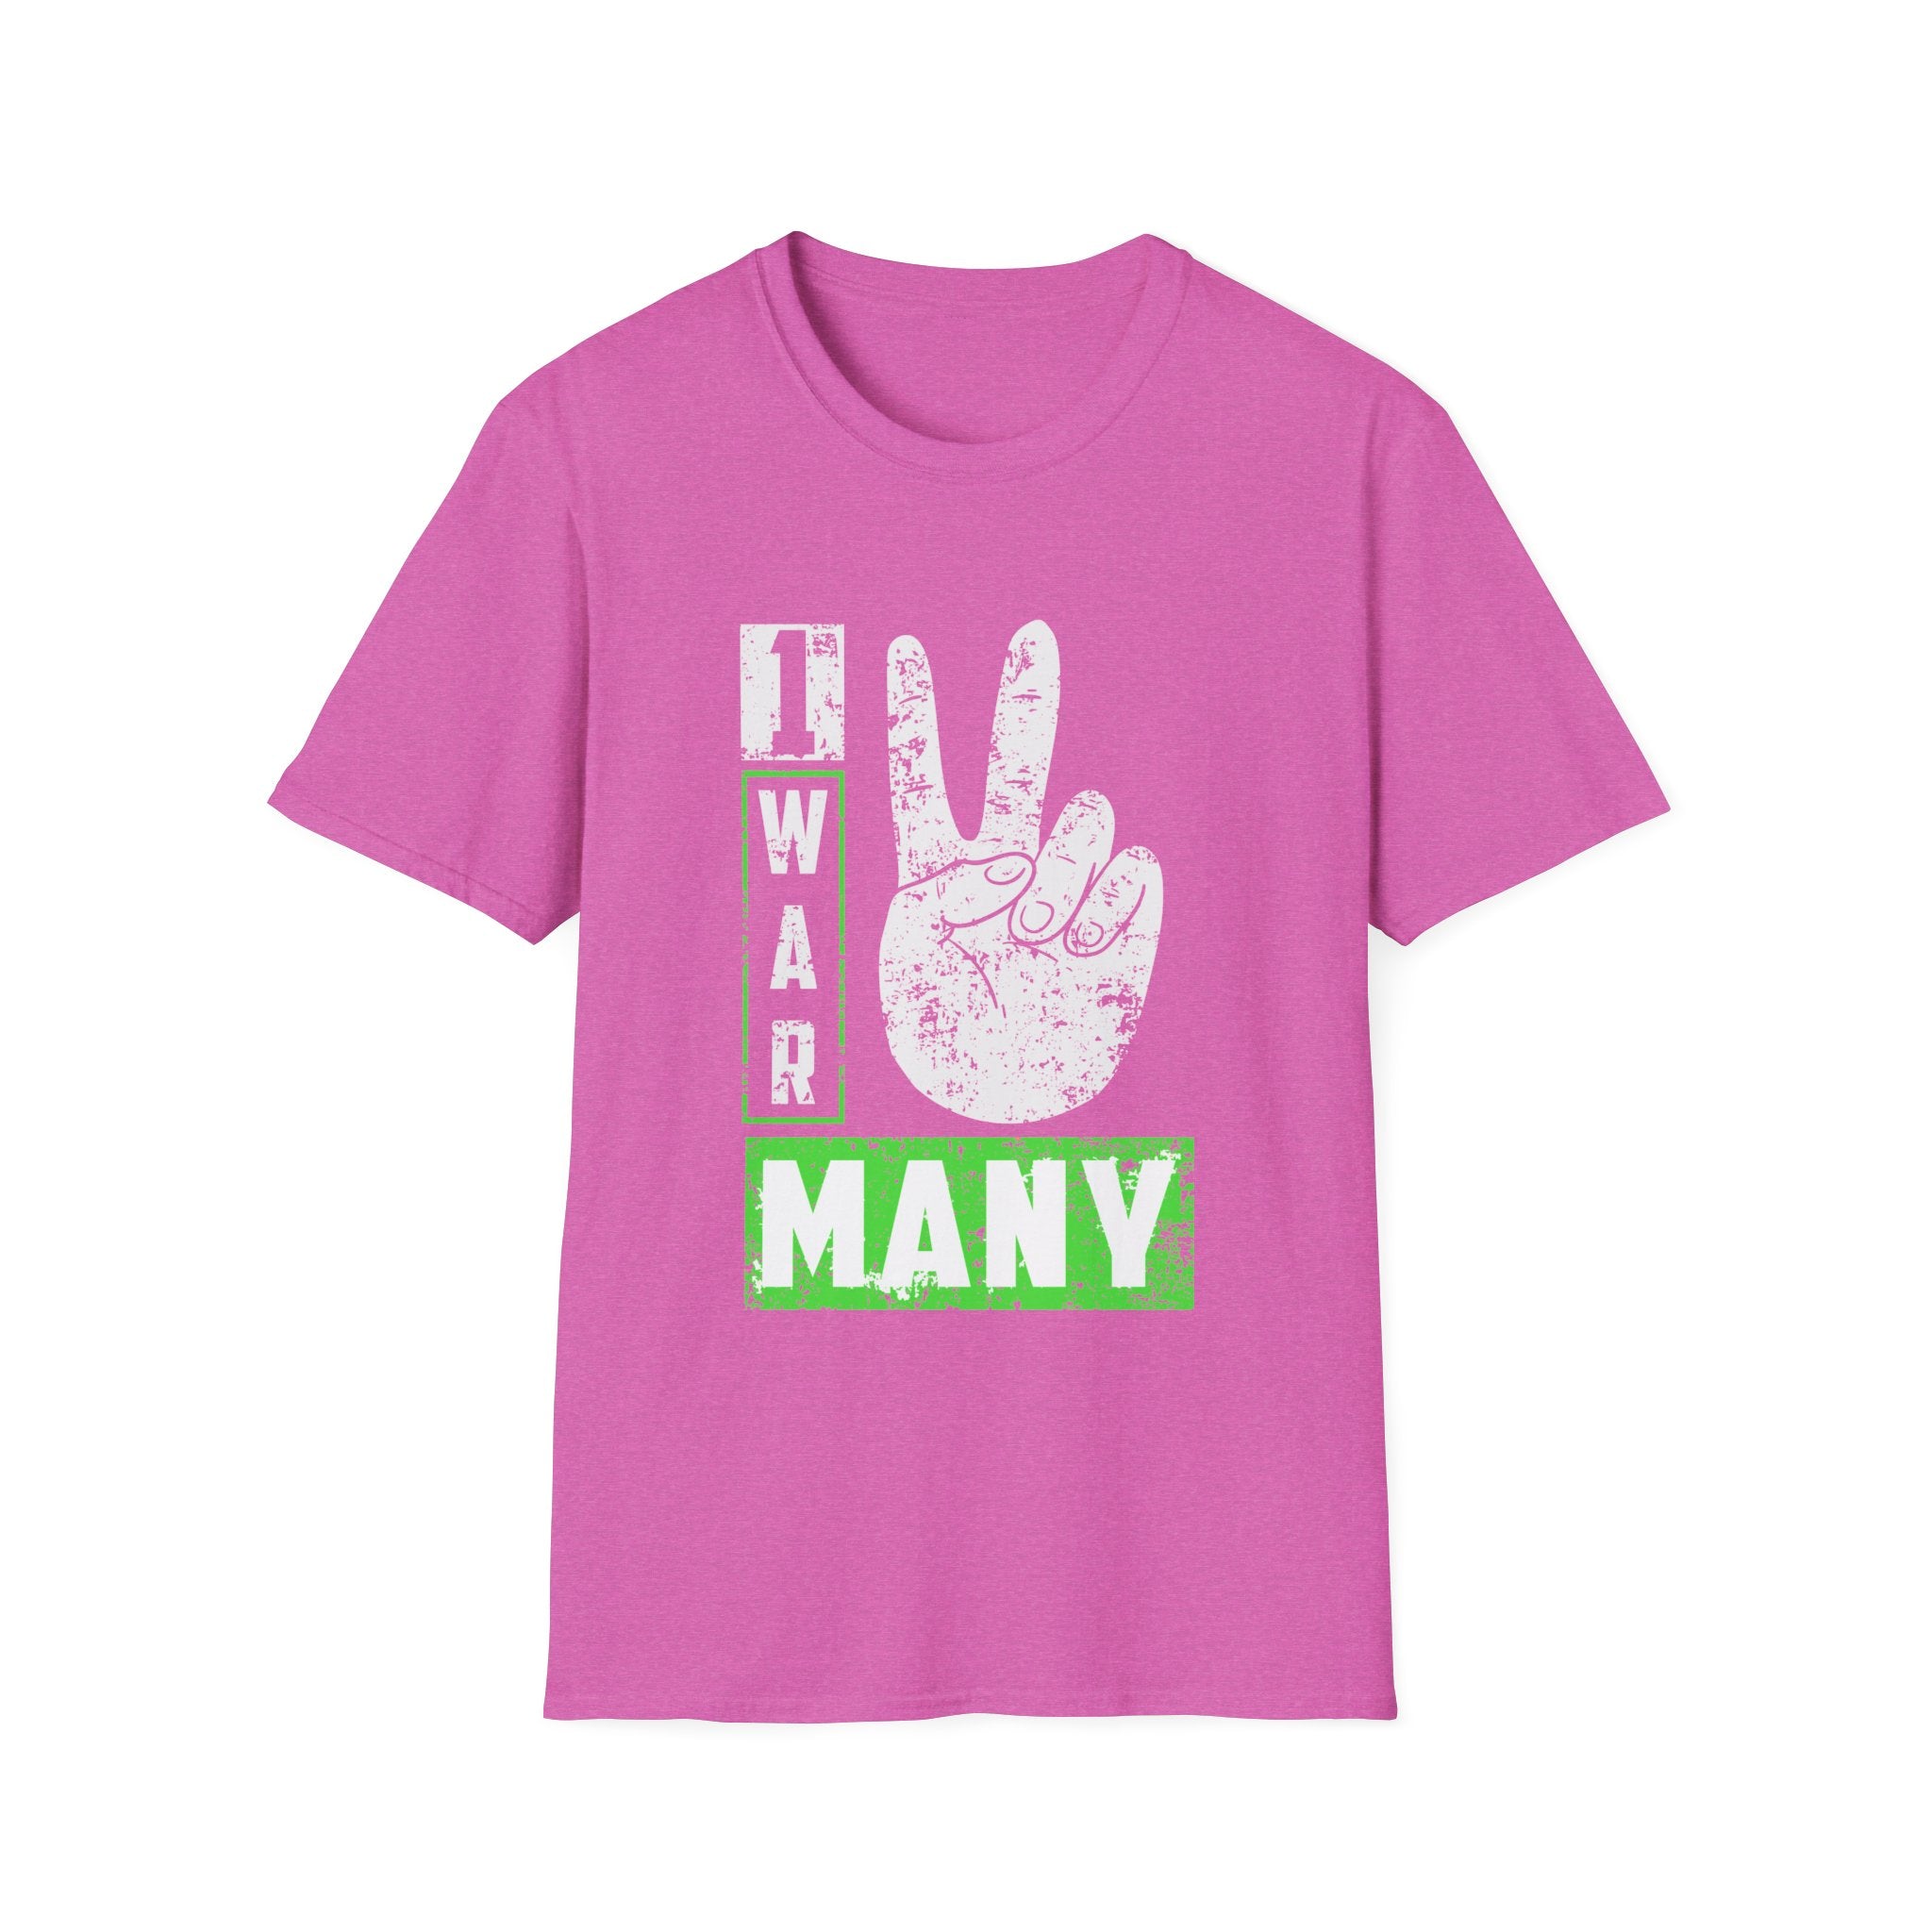 copy-of-1-war-2-many-unisex-bold-t-shirt